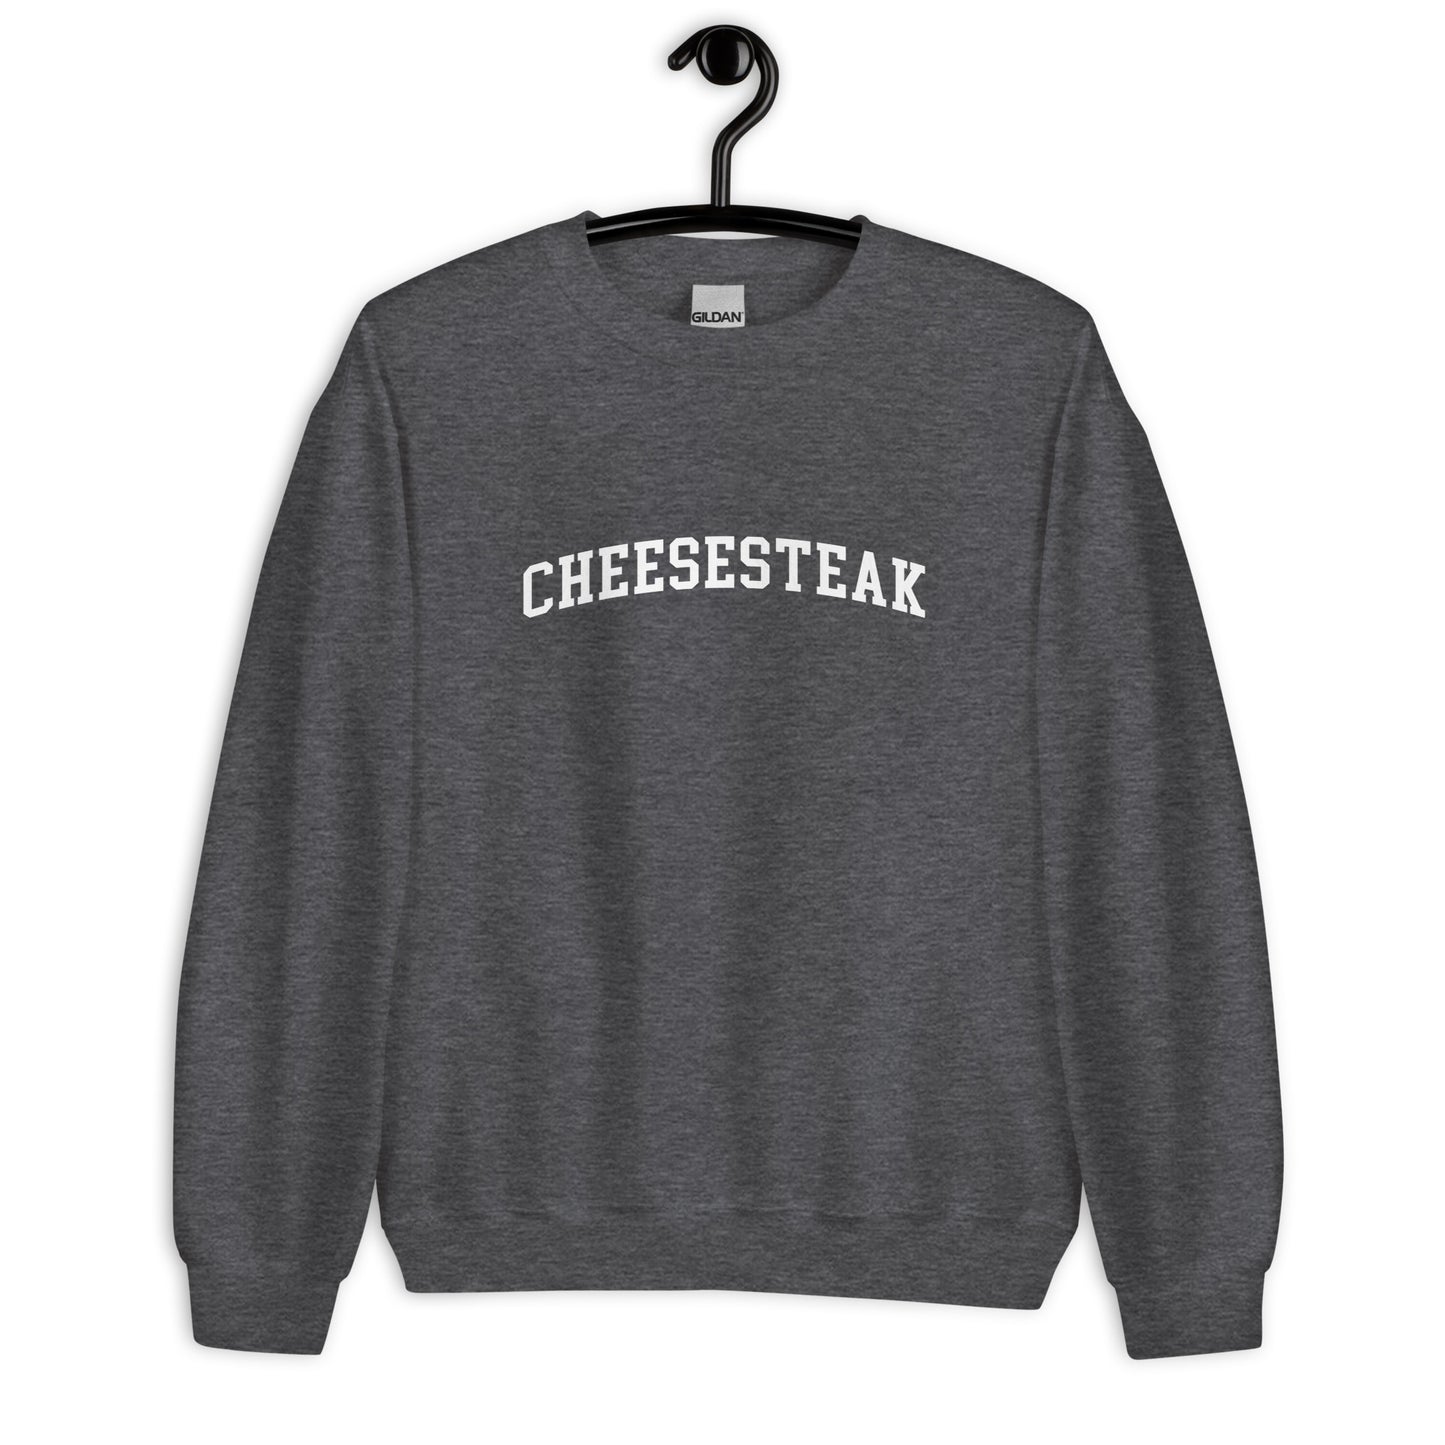 Cheesesteak Sweatshirt - Arched Font